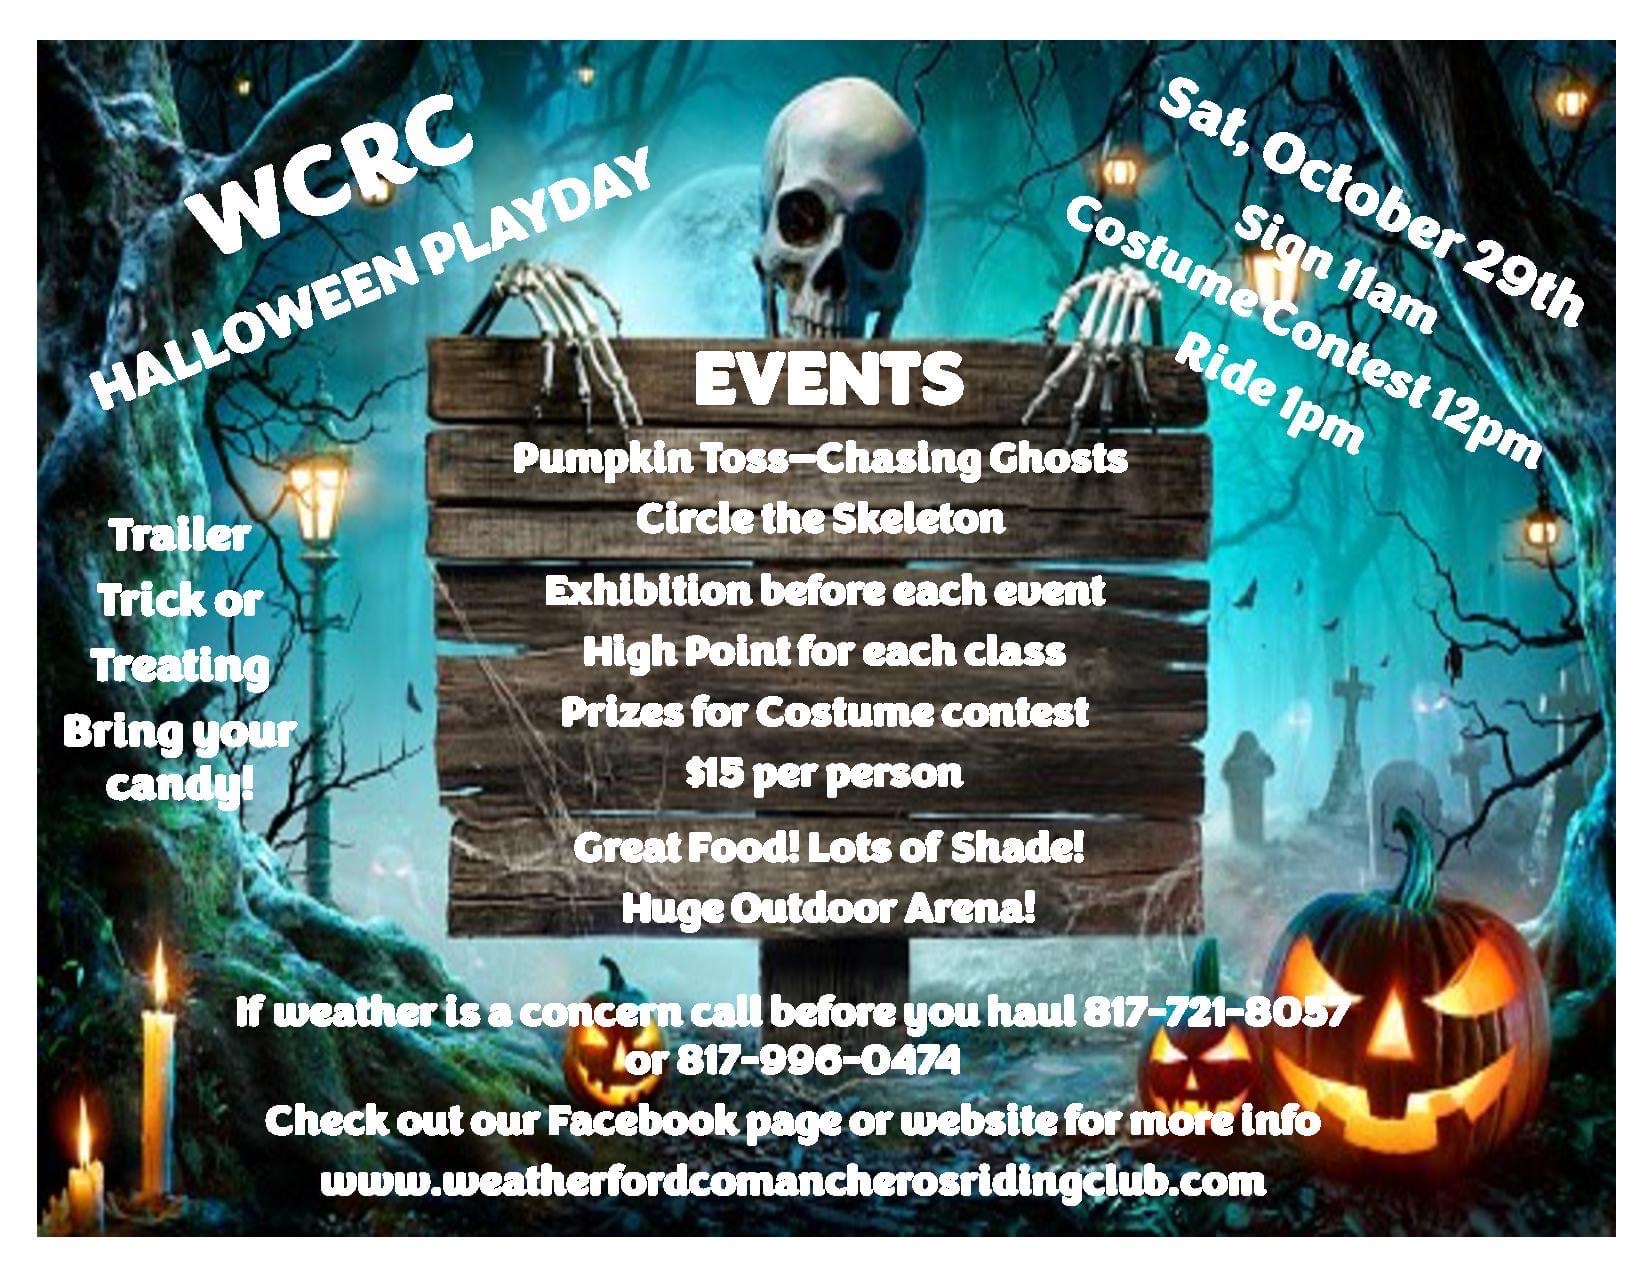 WCRC Halloween Playday